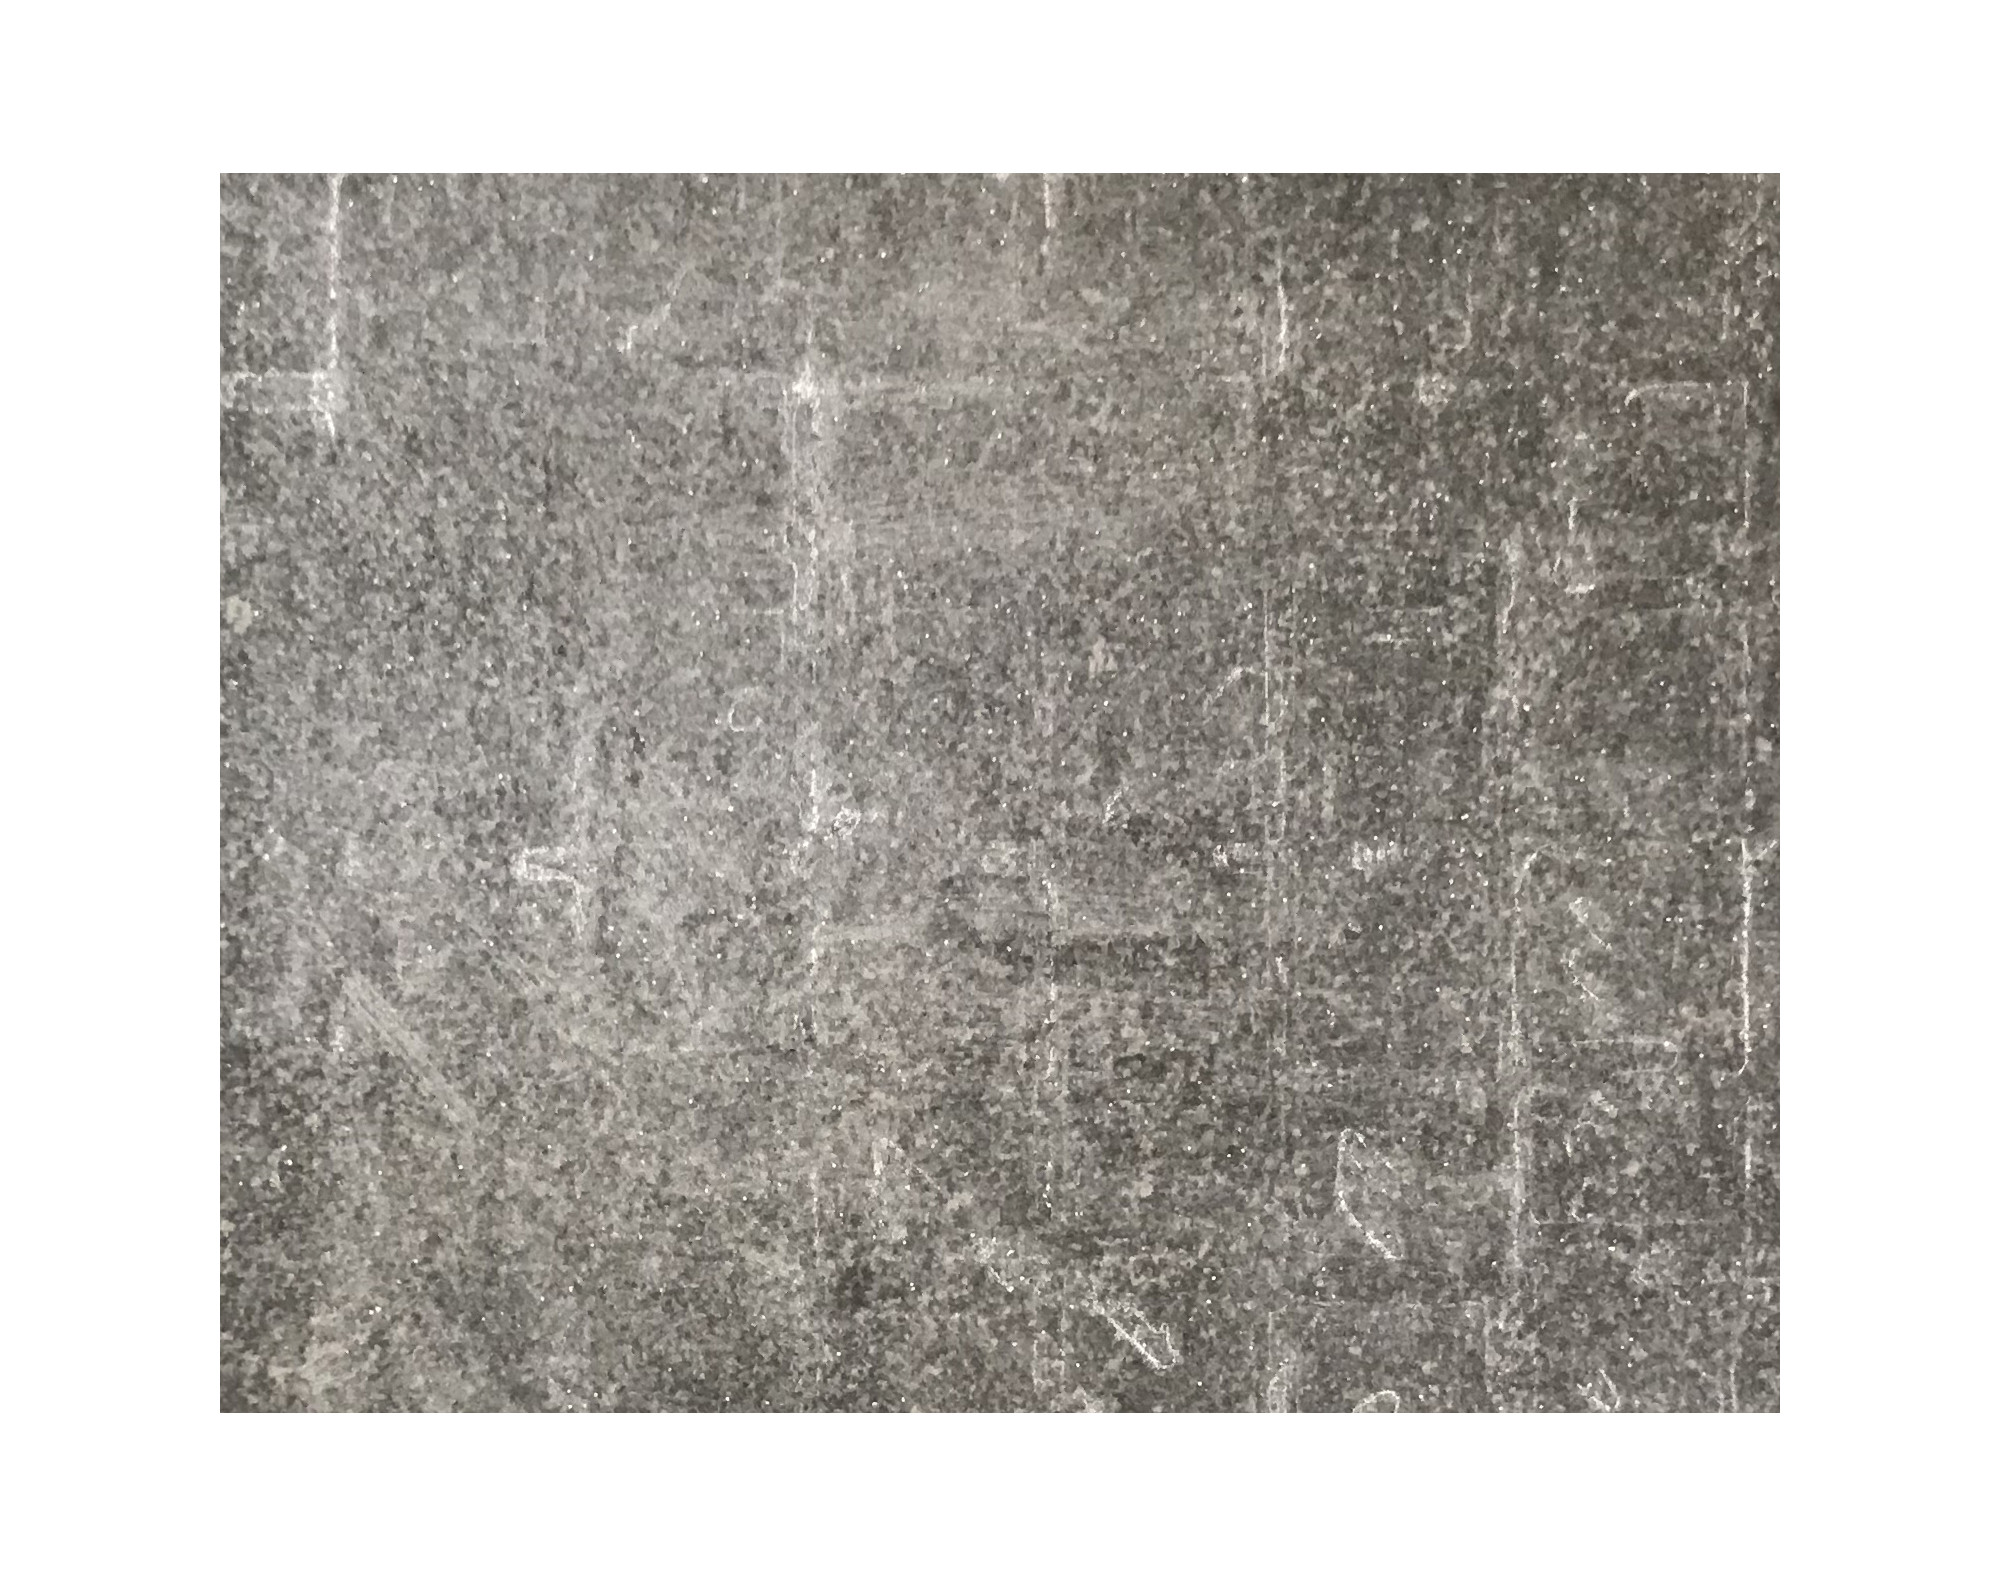 Harmo roc maranelloset, keramiek-serie, rond d:5,00m, zand zwart, keramisch porselein